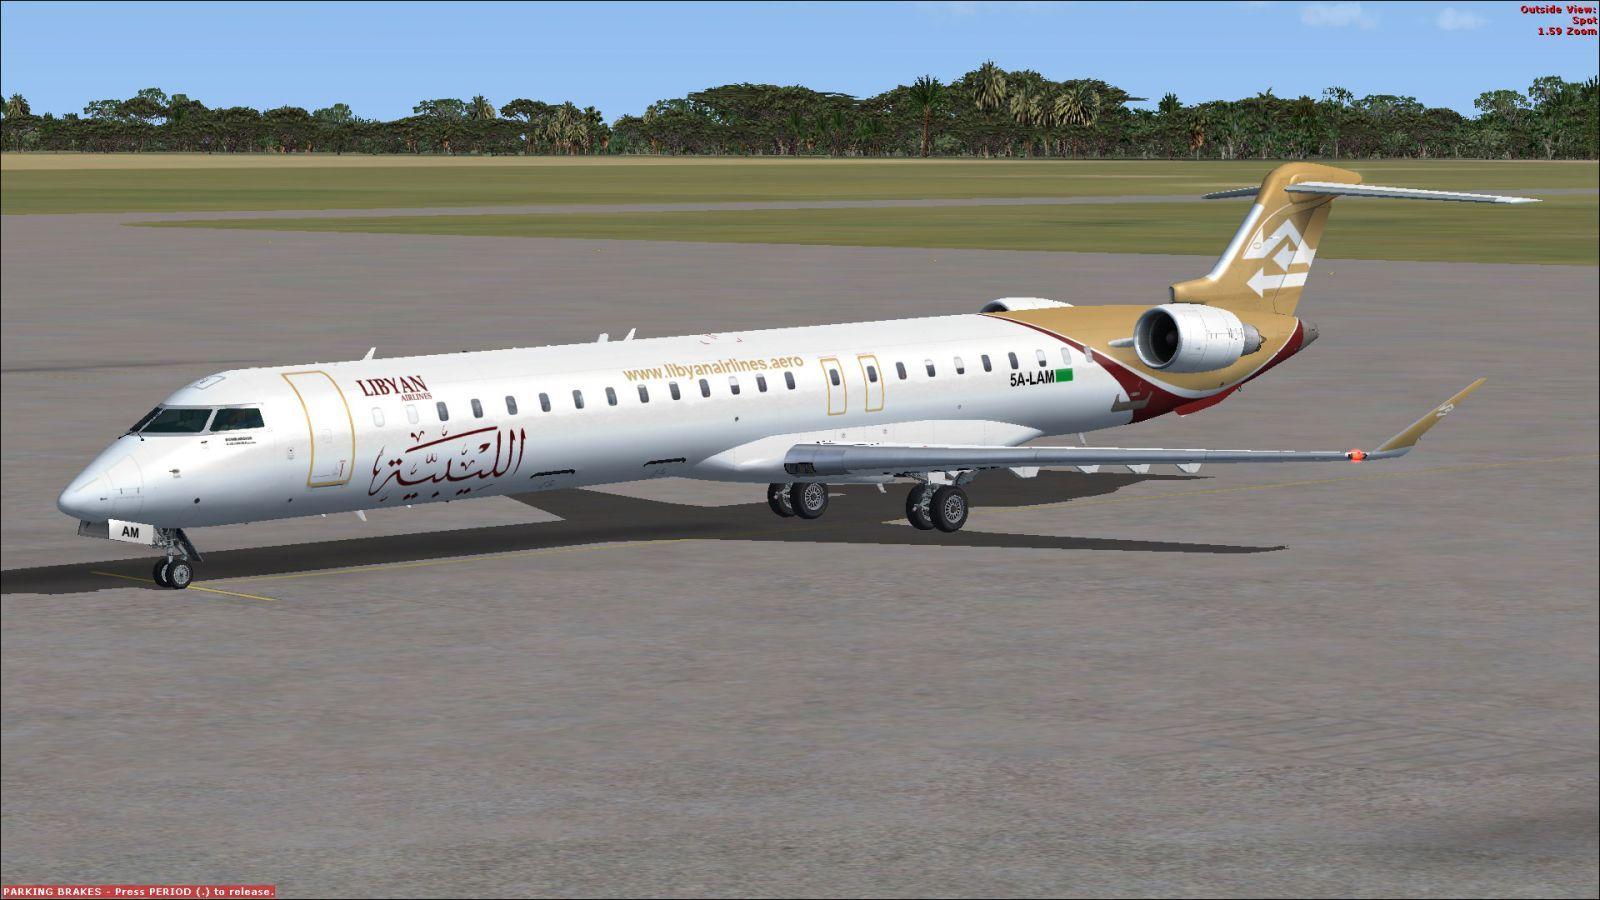 Libyan Airlines CRJ 900